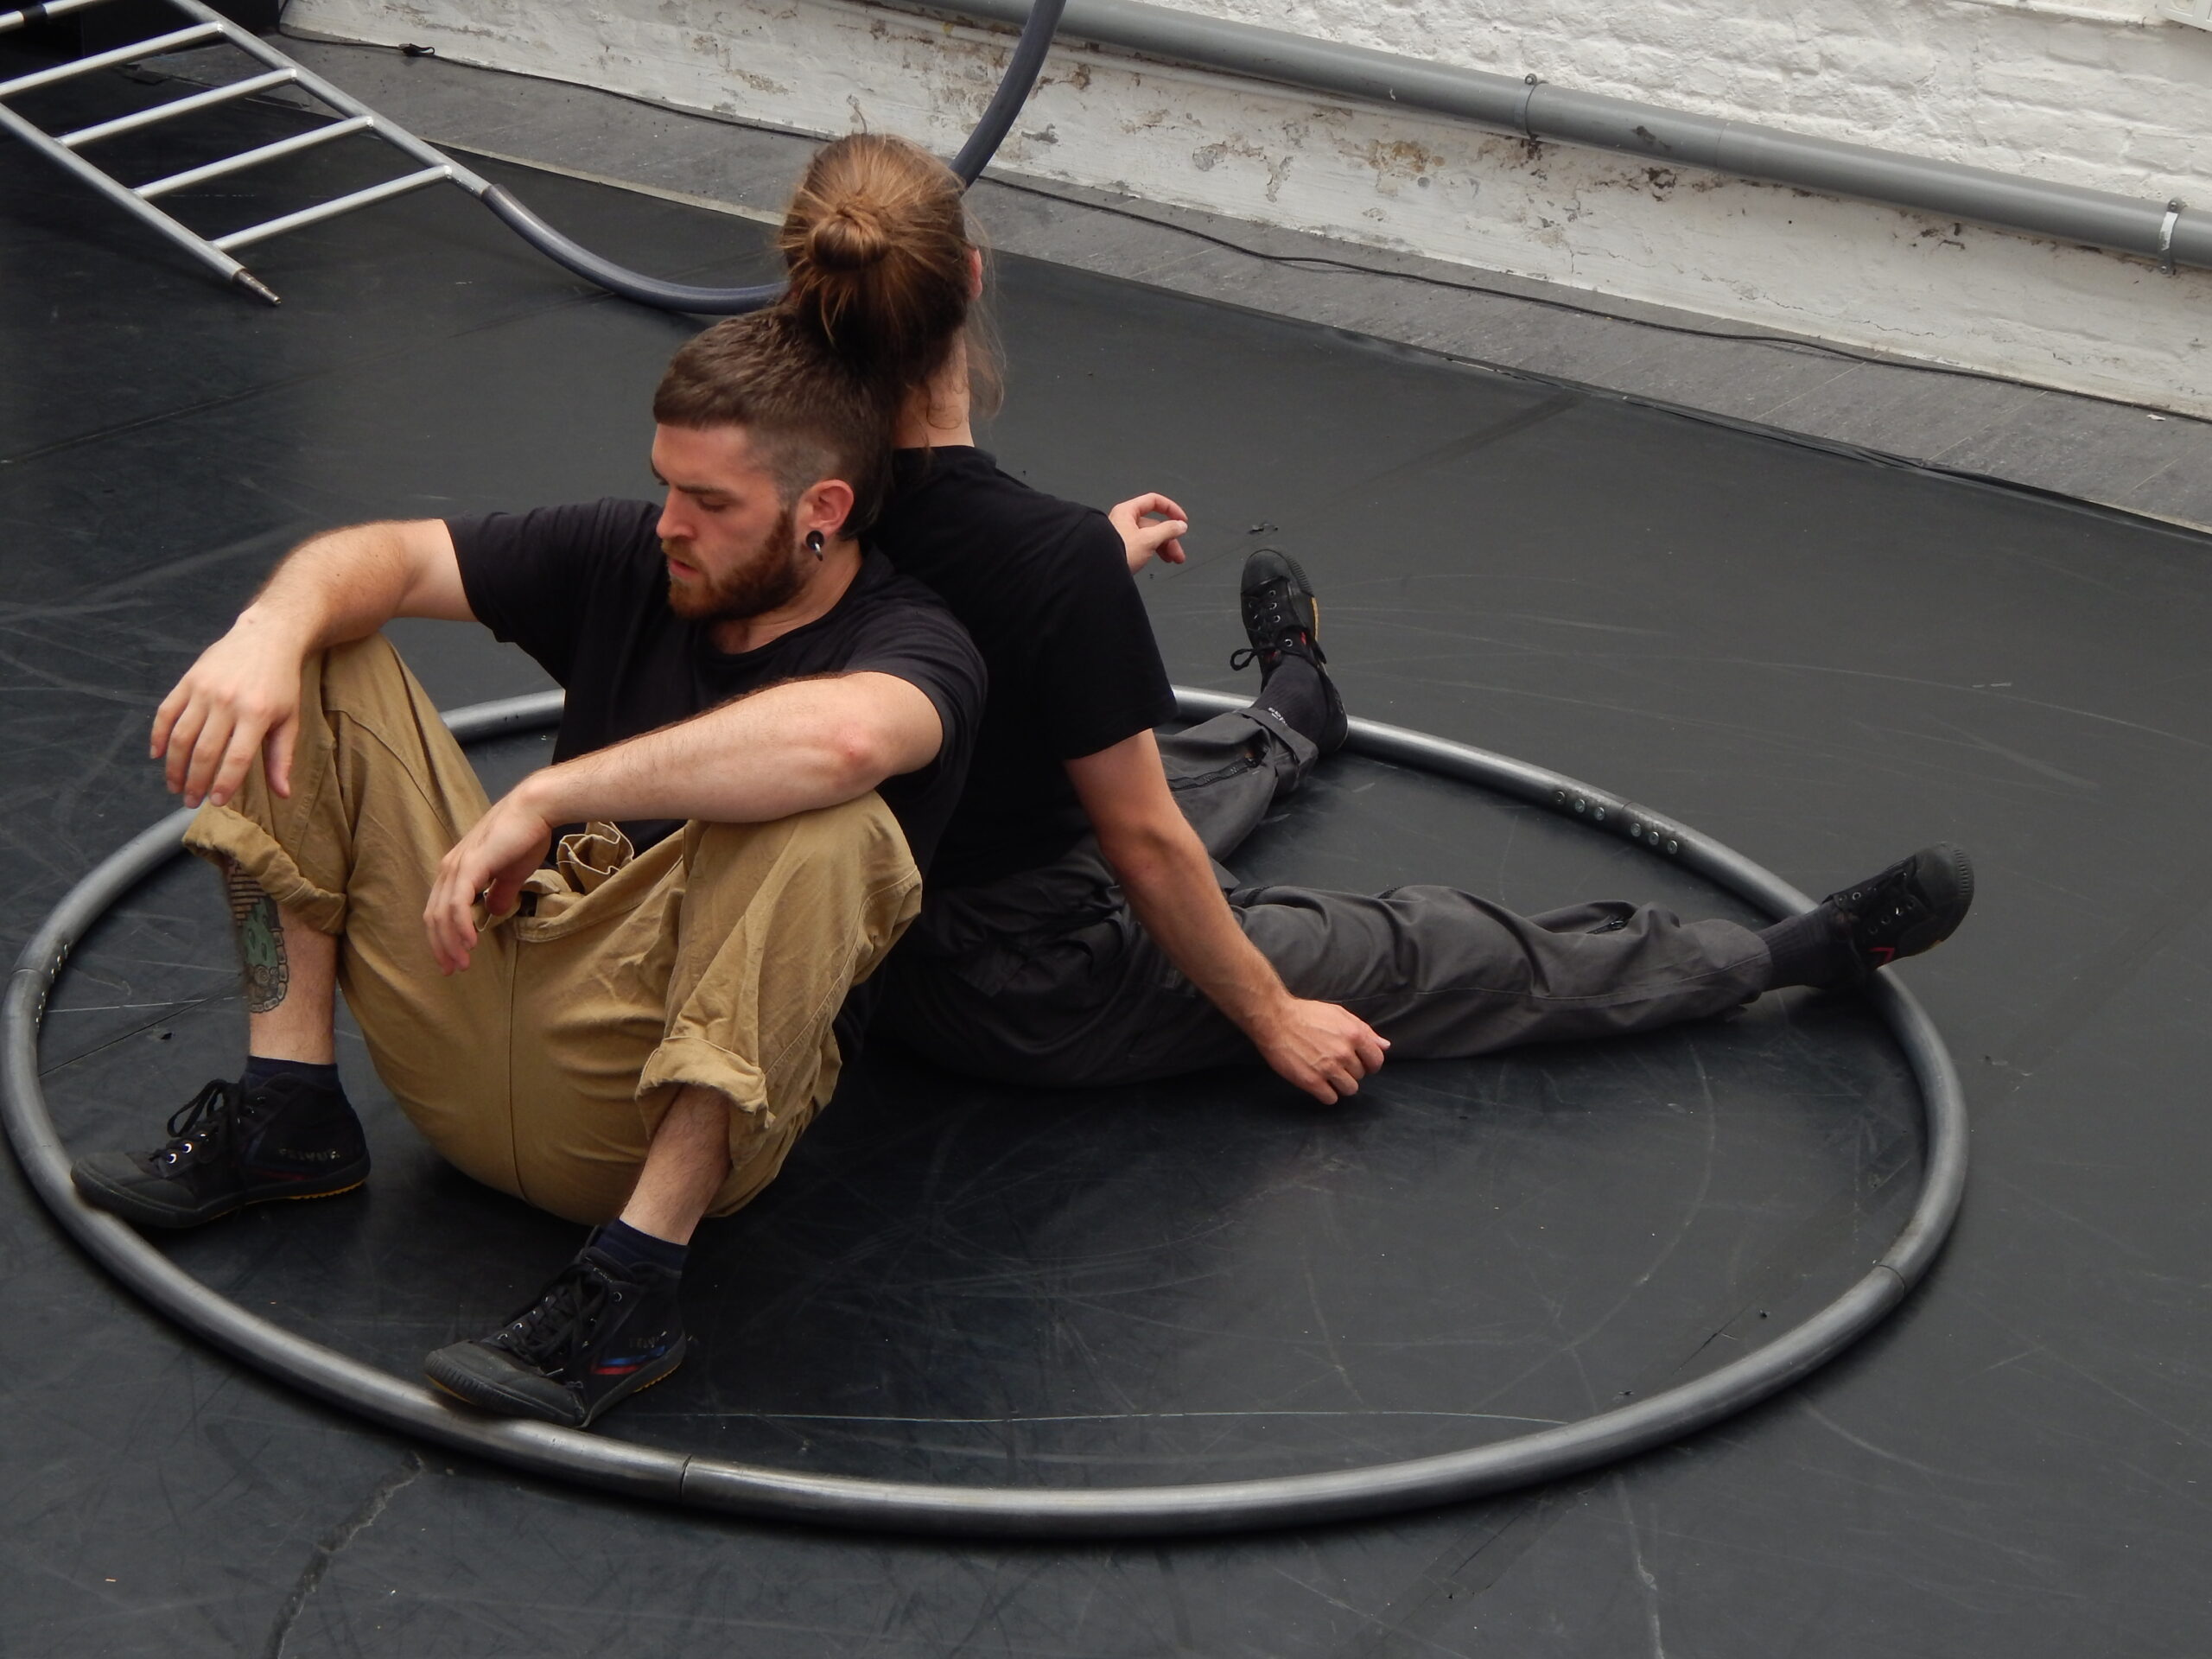 Aapo Honkanen & Daniele Ippolito – Cyr wheel & ladder act